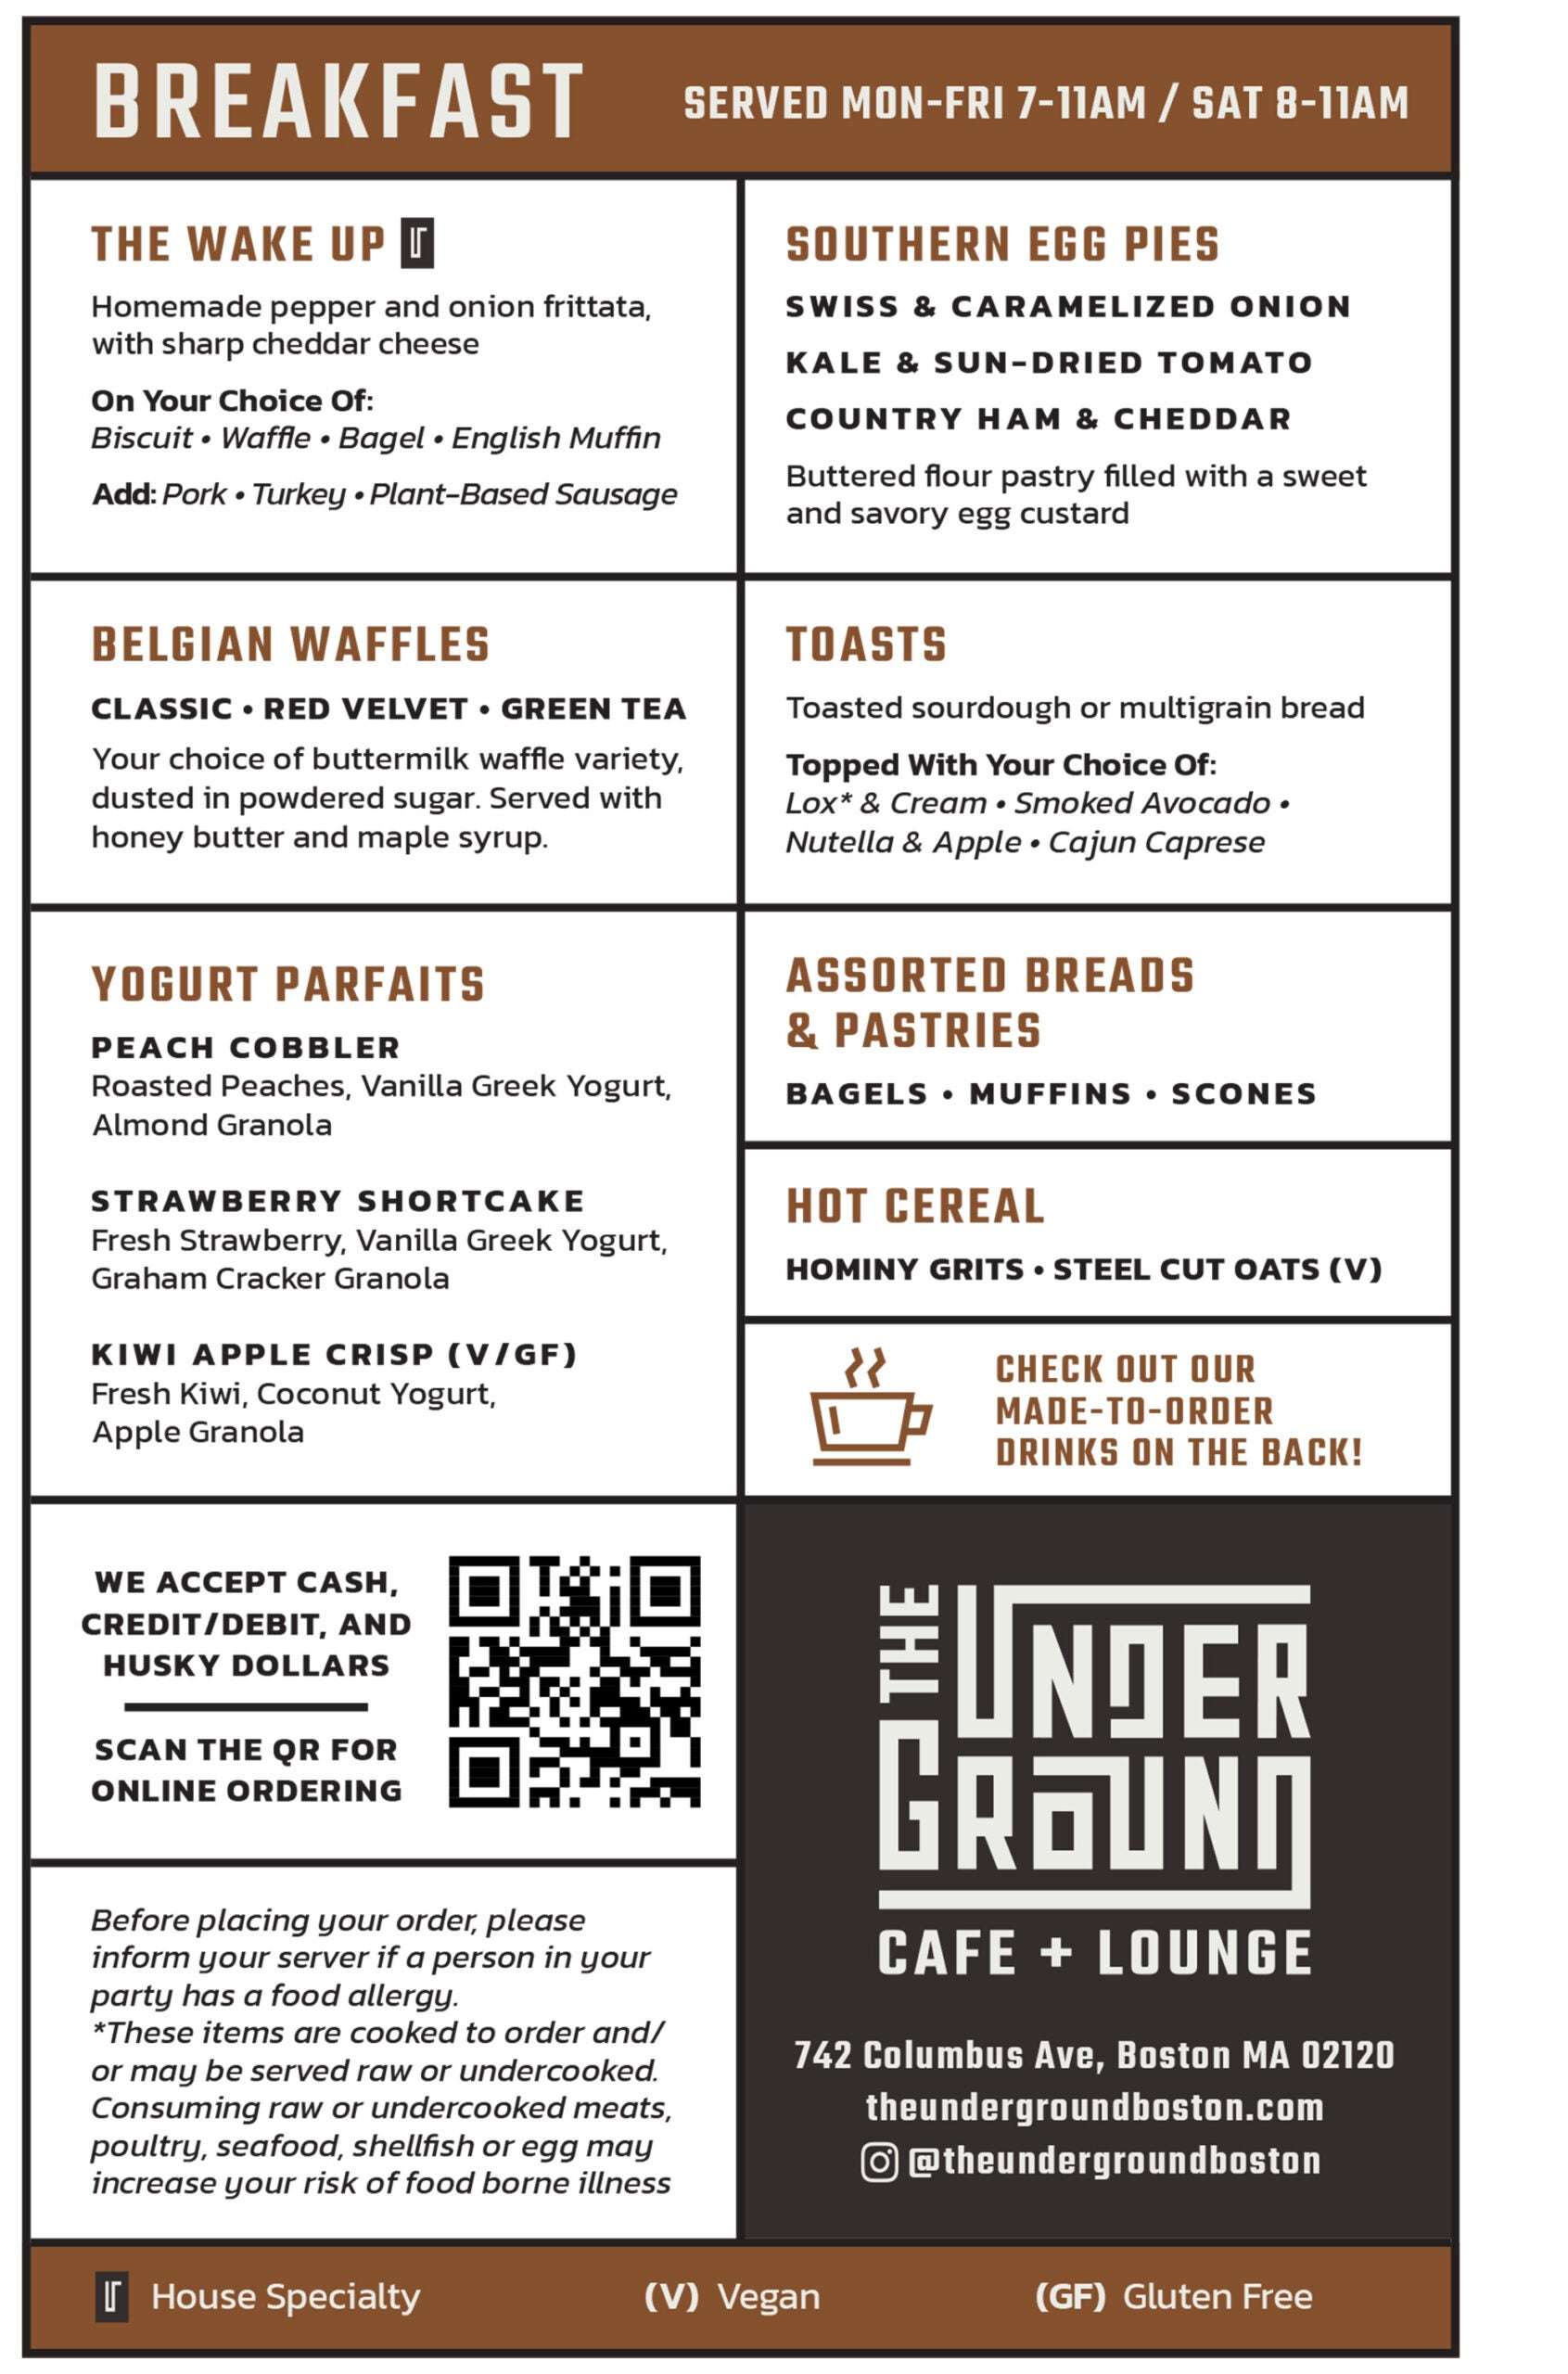 The Underground Cafe + Lounge menu